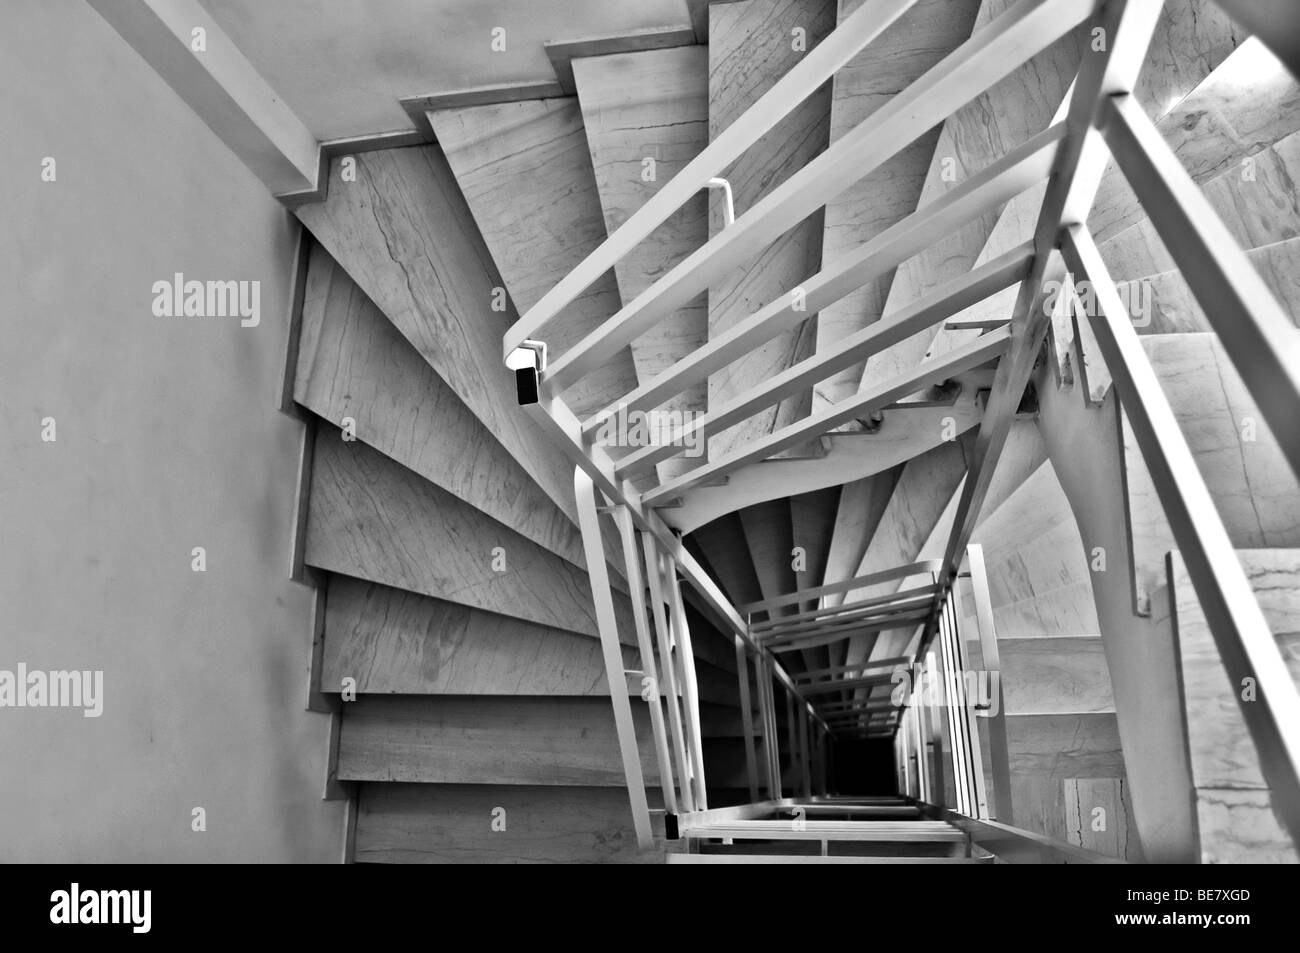 Interior staircase architecture background. Black and white. Stock Photo